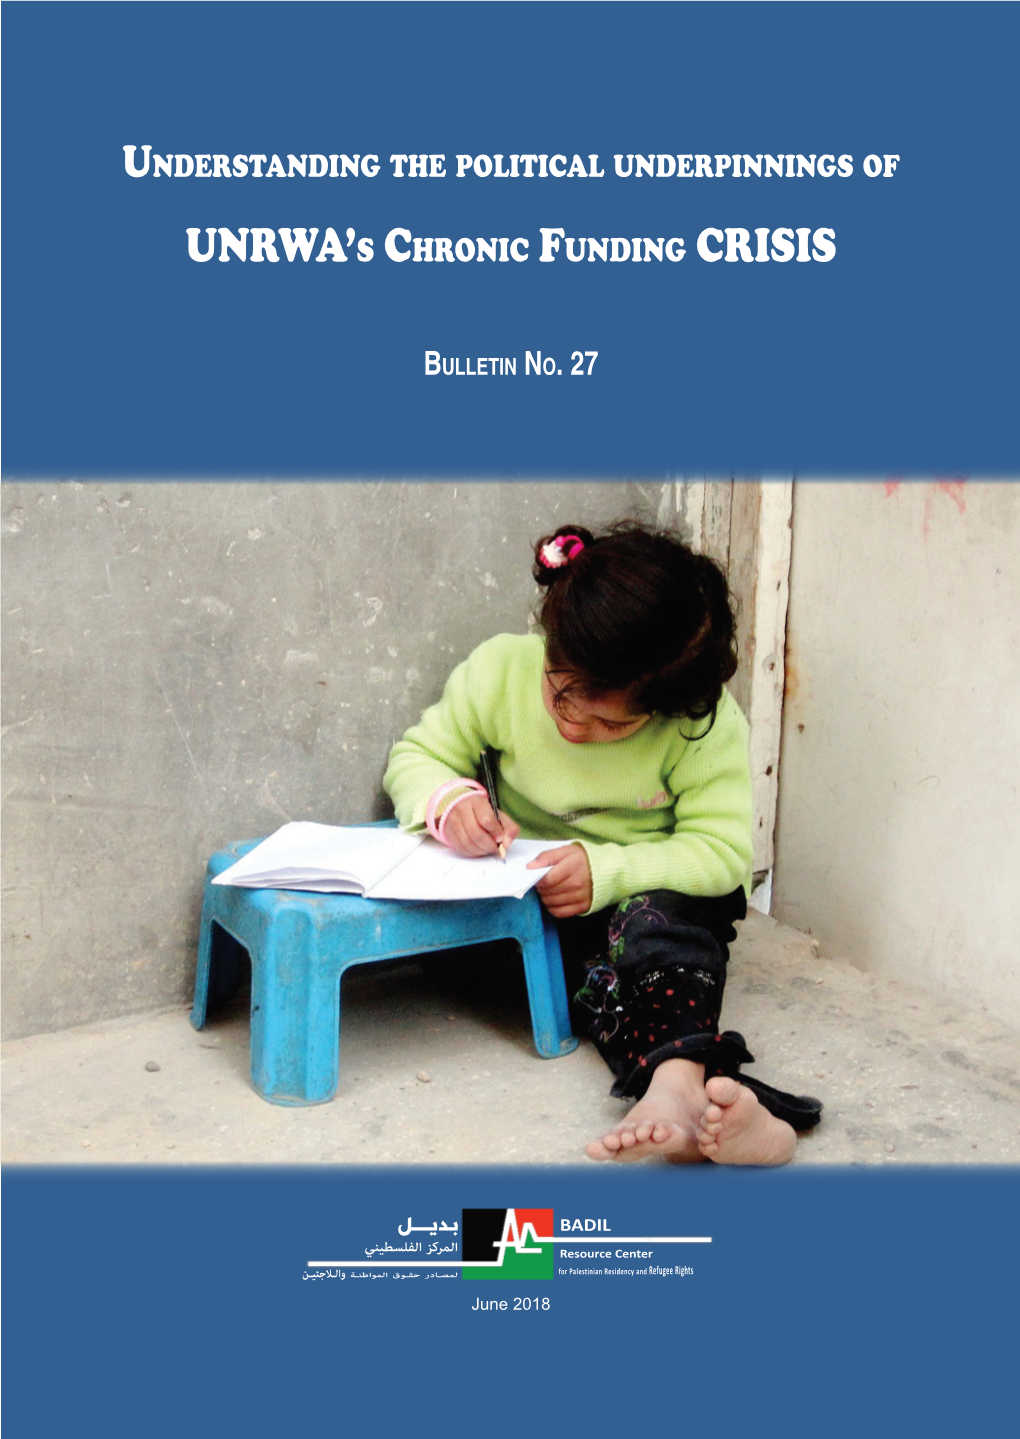 Unrwa's Chronic Funding Crisis